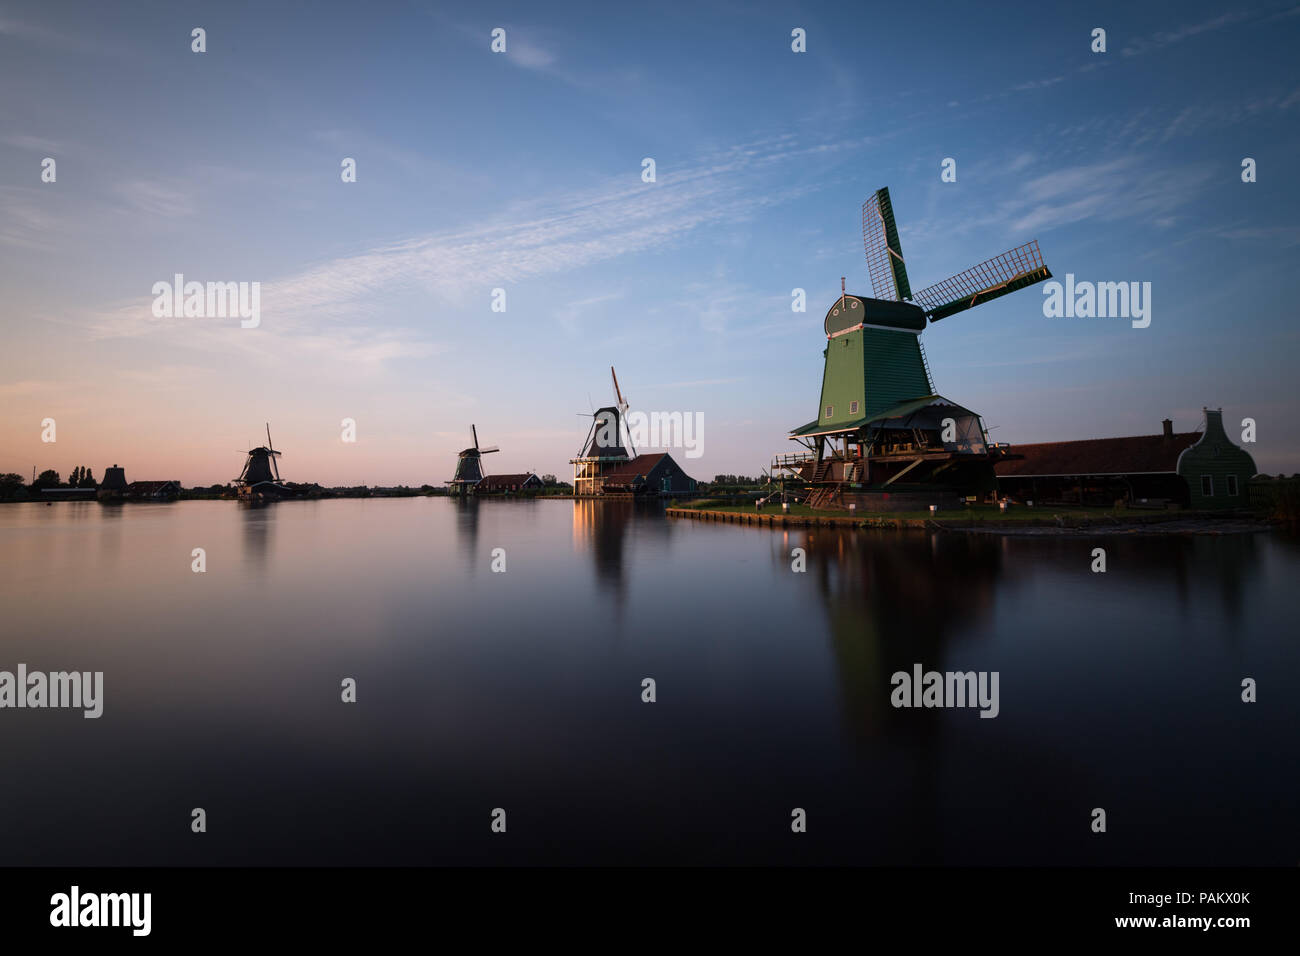 The windmills of Zaanse Schans, Netherlands Stock Photo